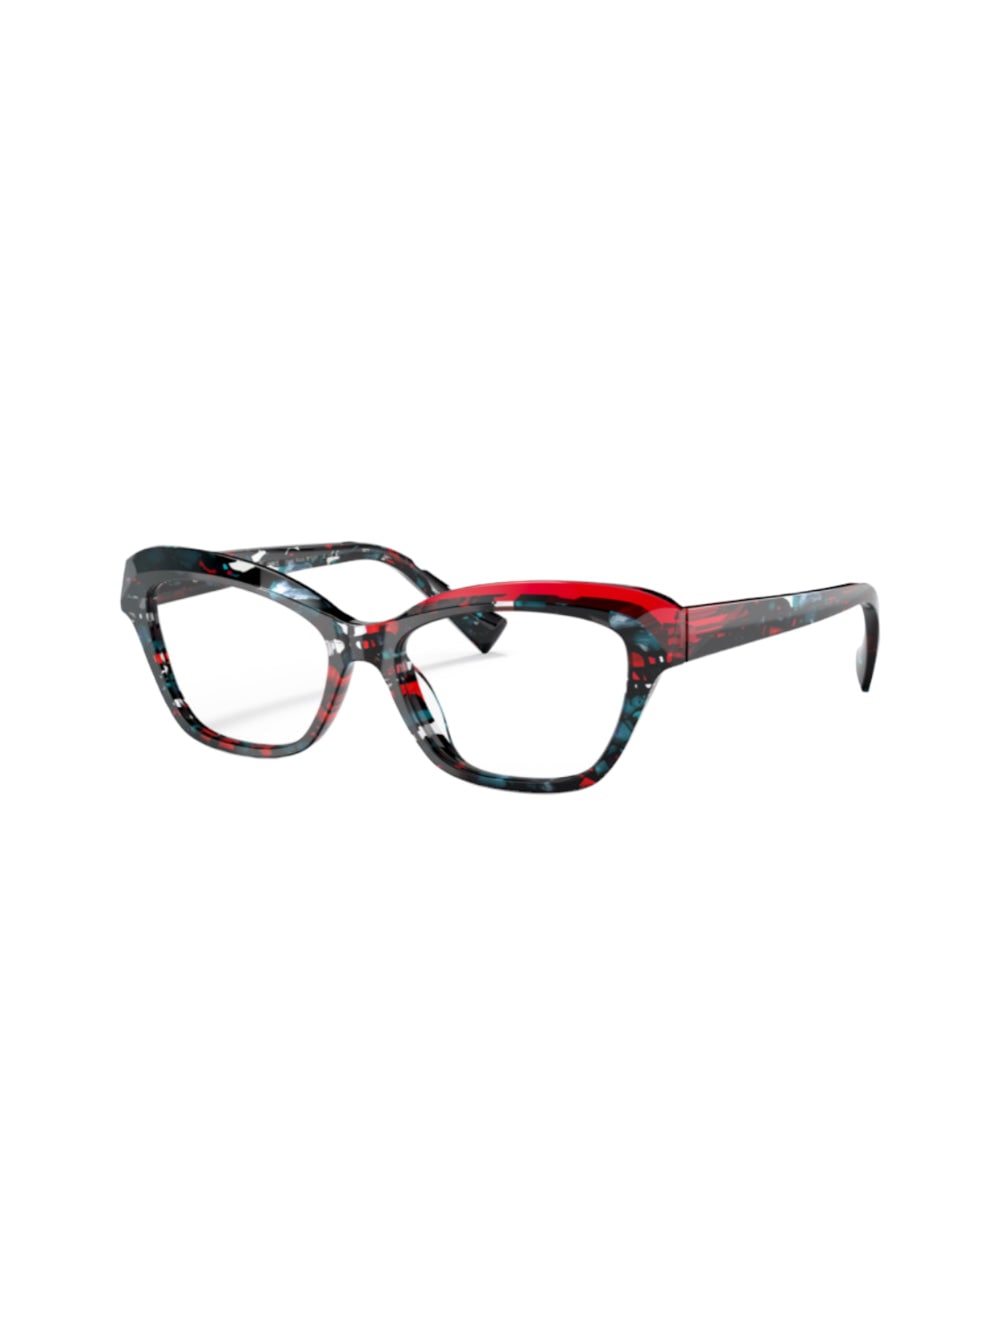 Shop Alain Mikli Sephine - 3147 - Red/blue Glasses